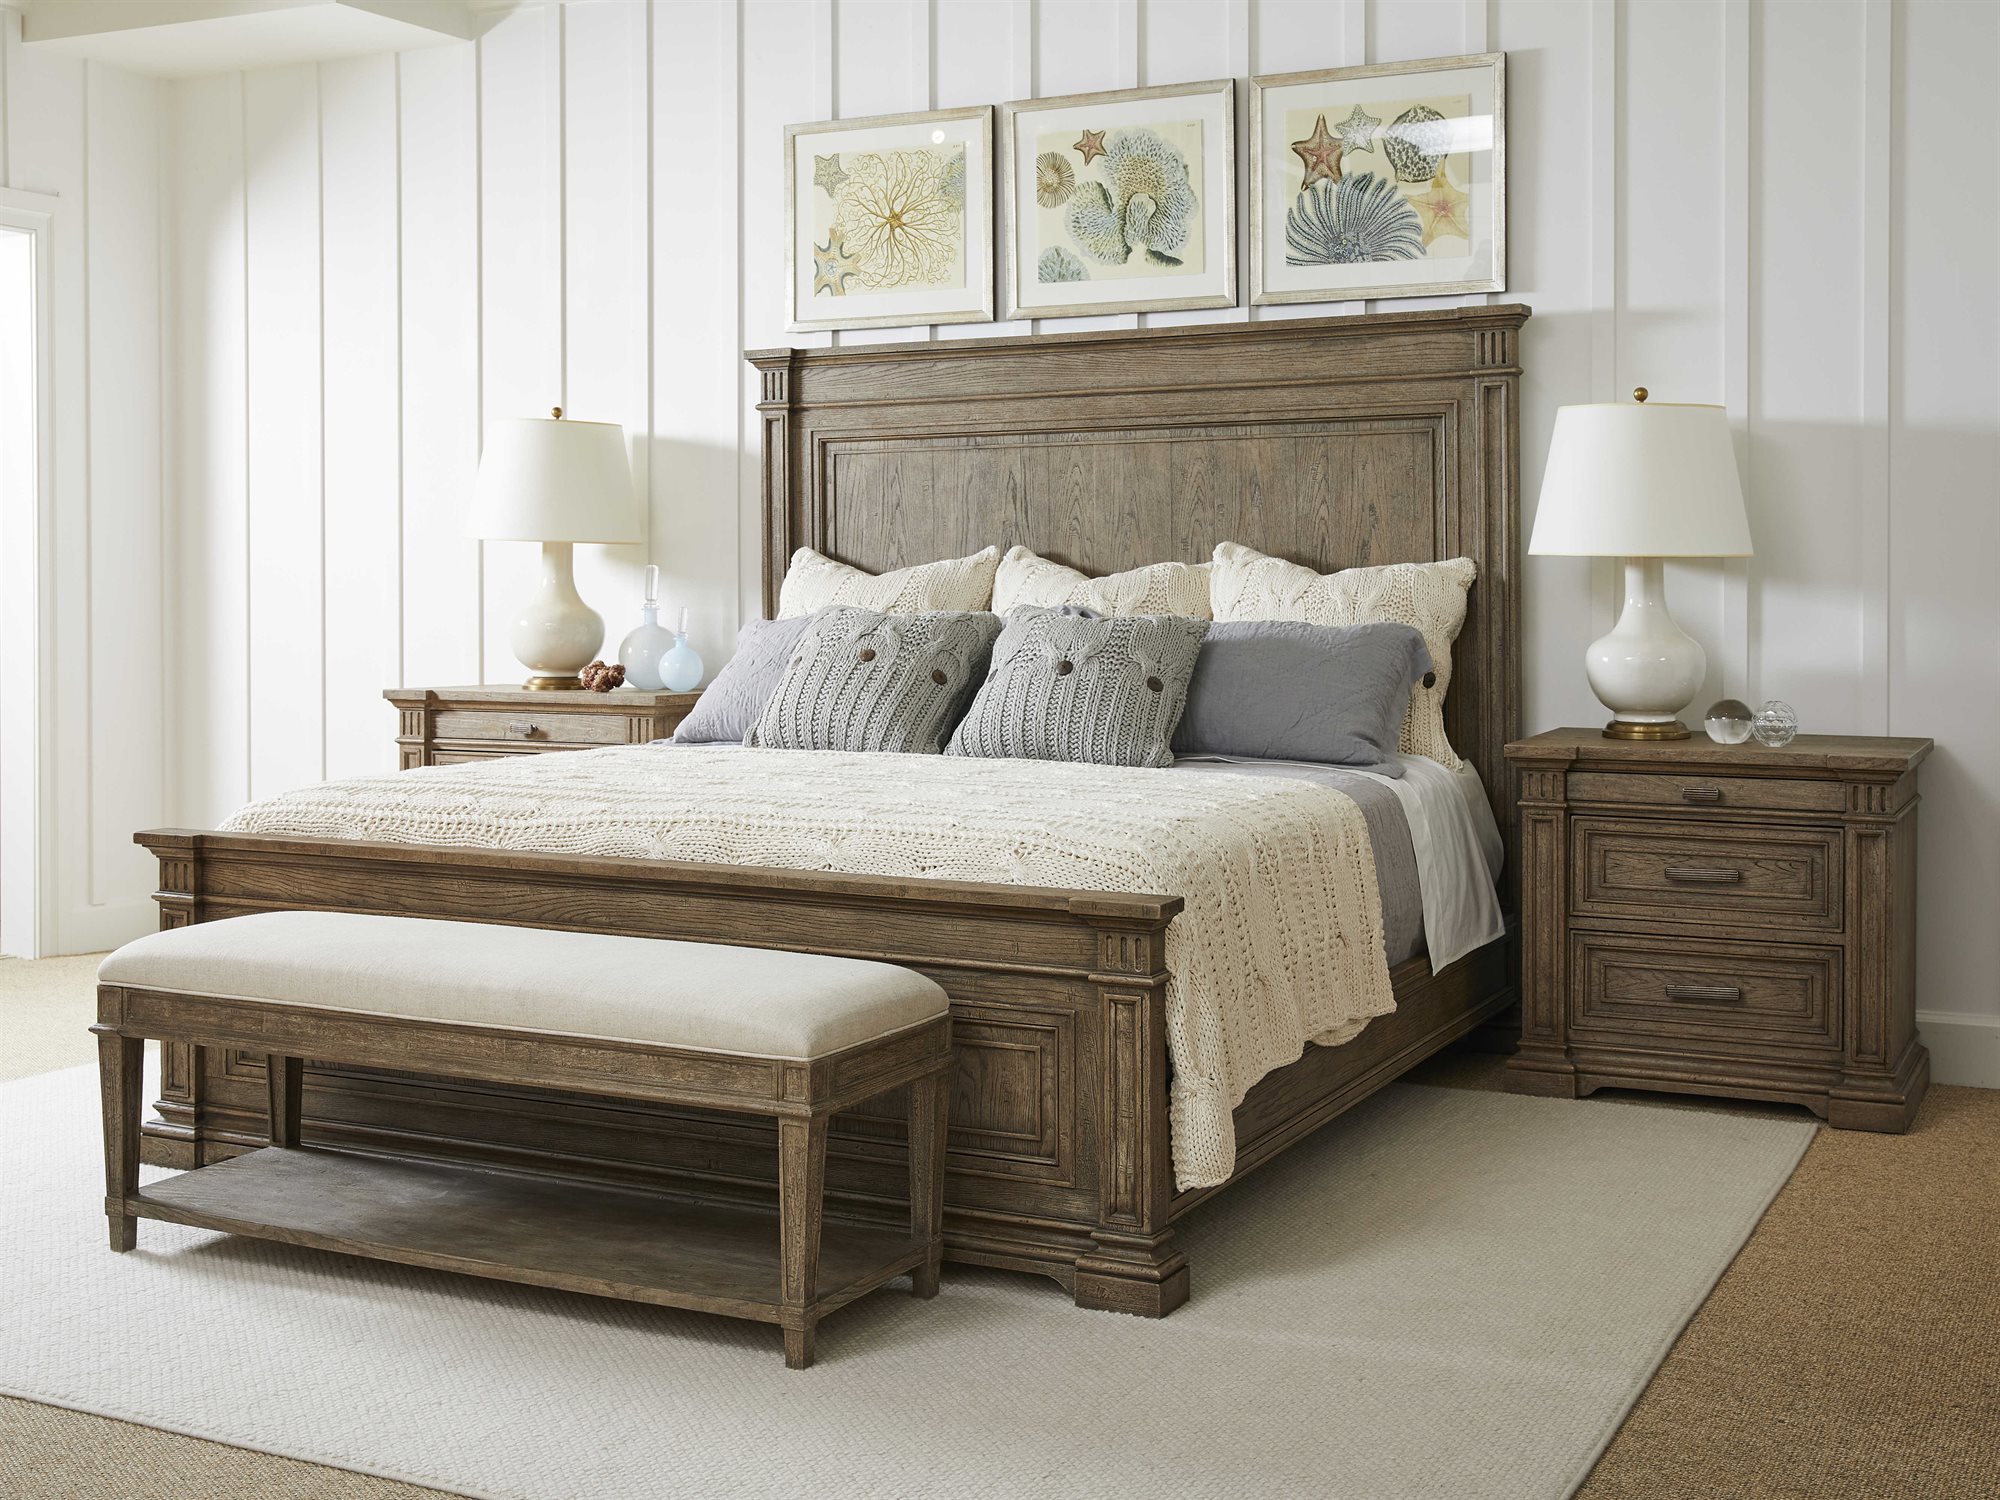 stanley bedroom furniture dressing chest 007-83-06